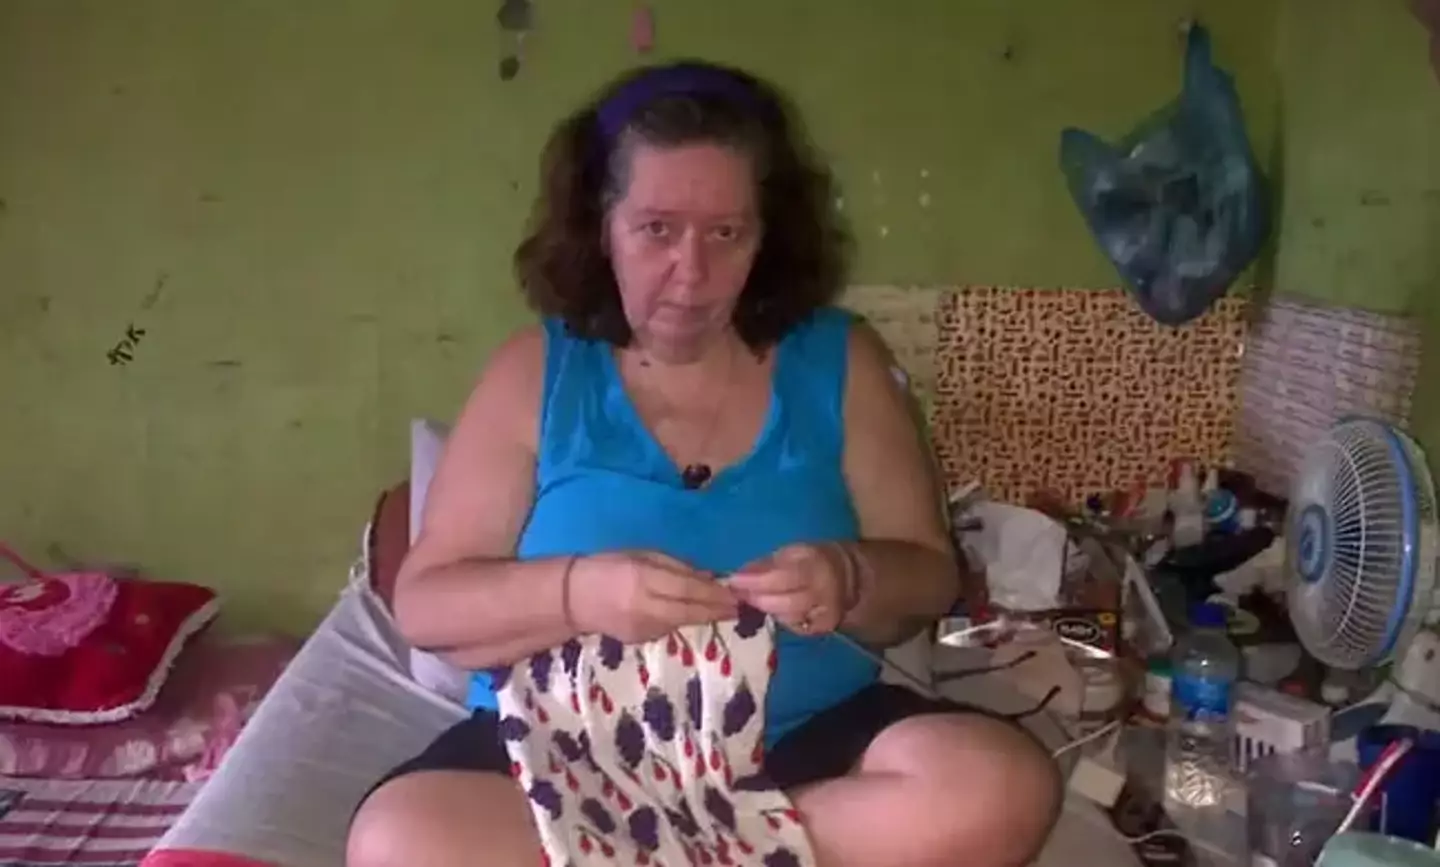 Lindsay Sandiford spends time knitting in prison.